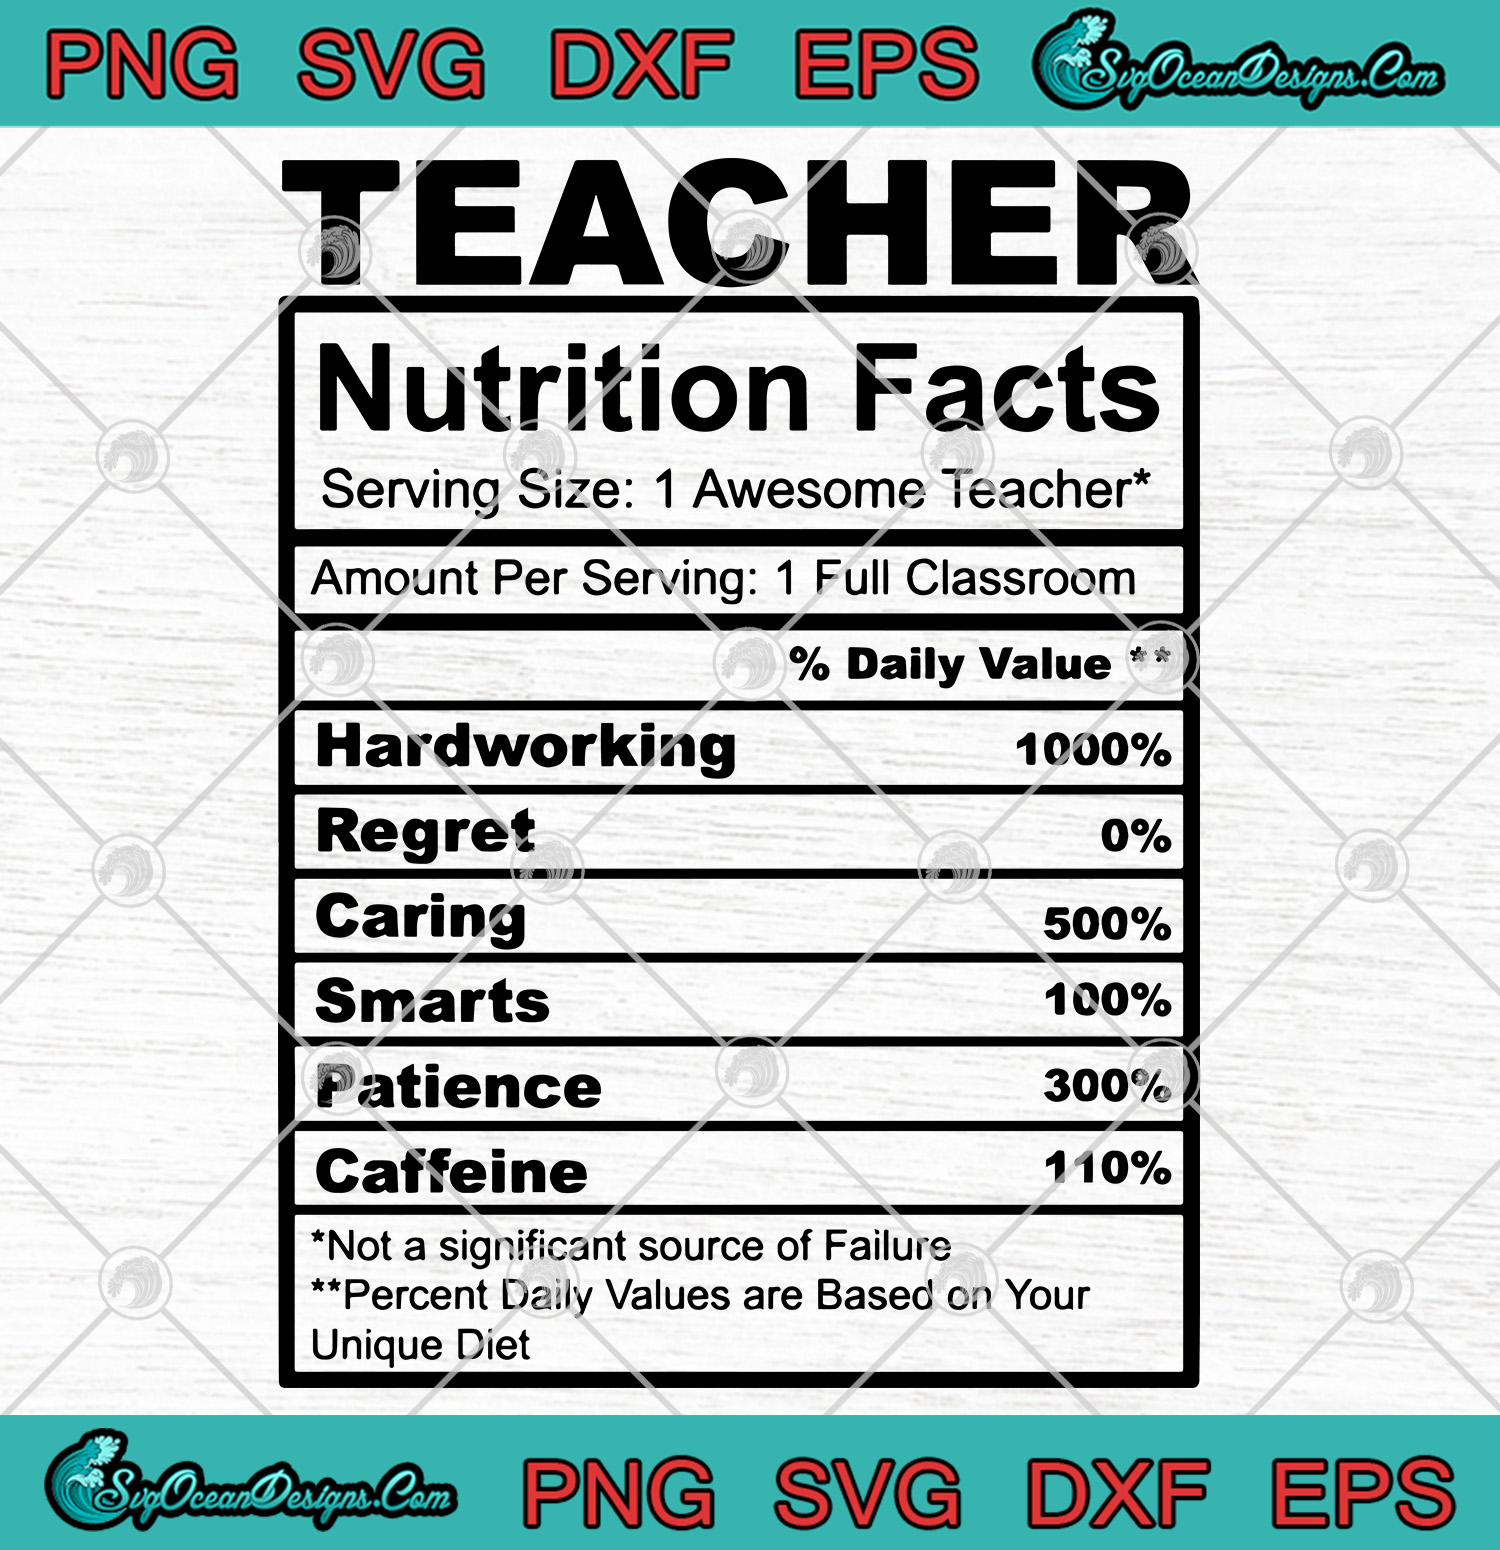 Download Instant Digital Download Black Educator Nutrition Facts Svg File Art Collectibles Prints Jewellerymilad Com